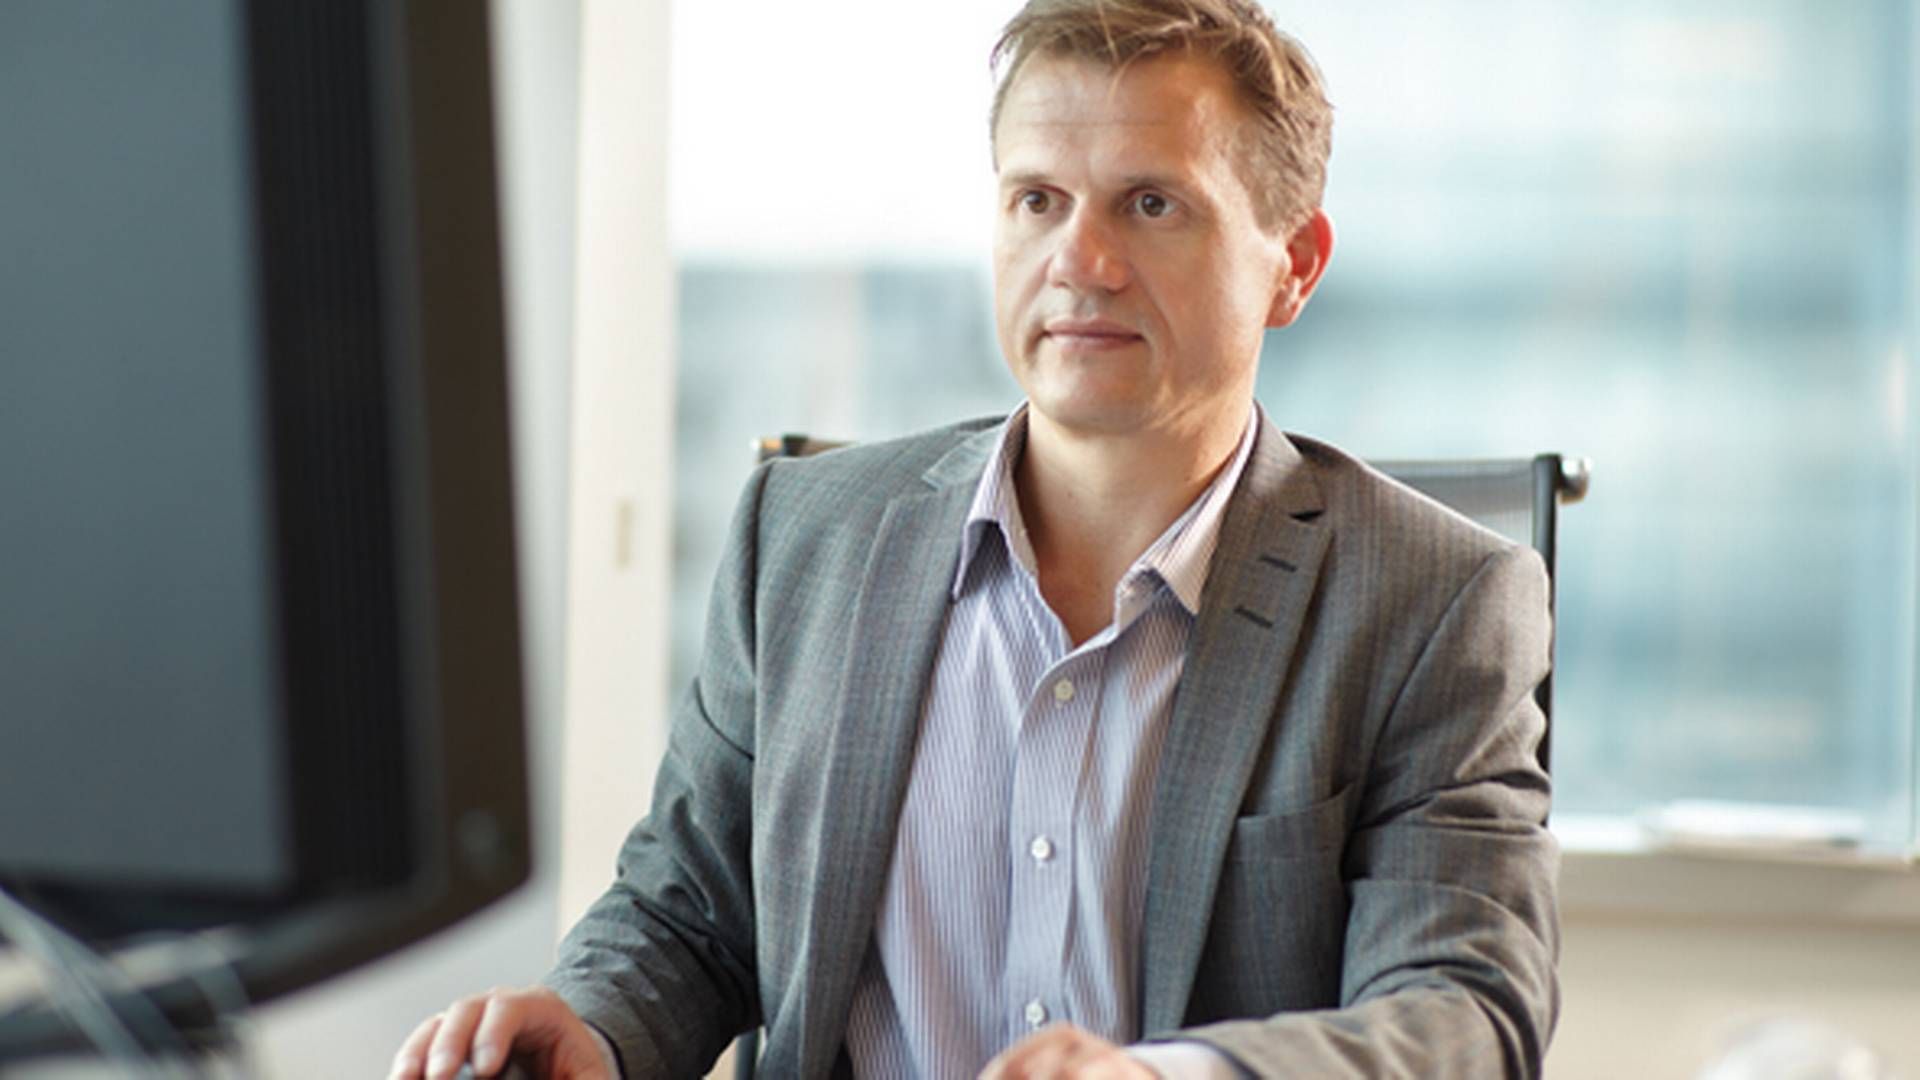 Fondsdirektør og partner hos kapitalforvalteren Formuepleje, Søren Astrup. | Foto: PR Forumepleje